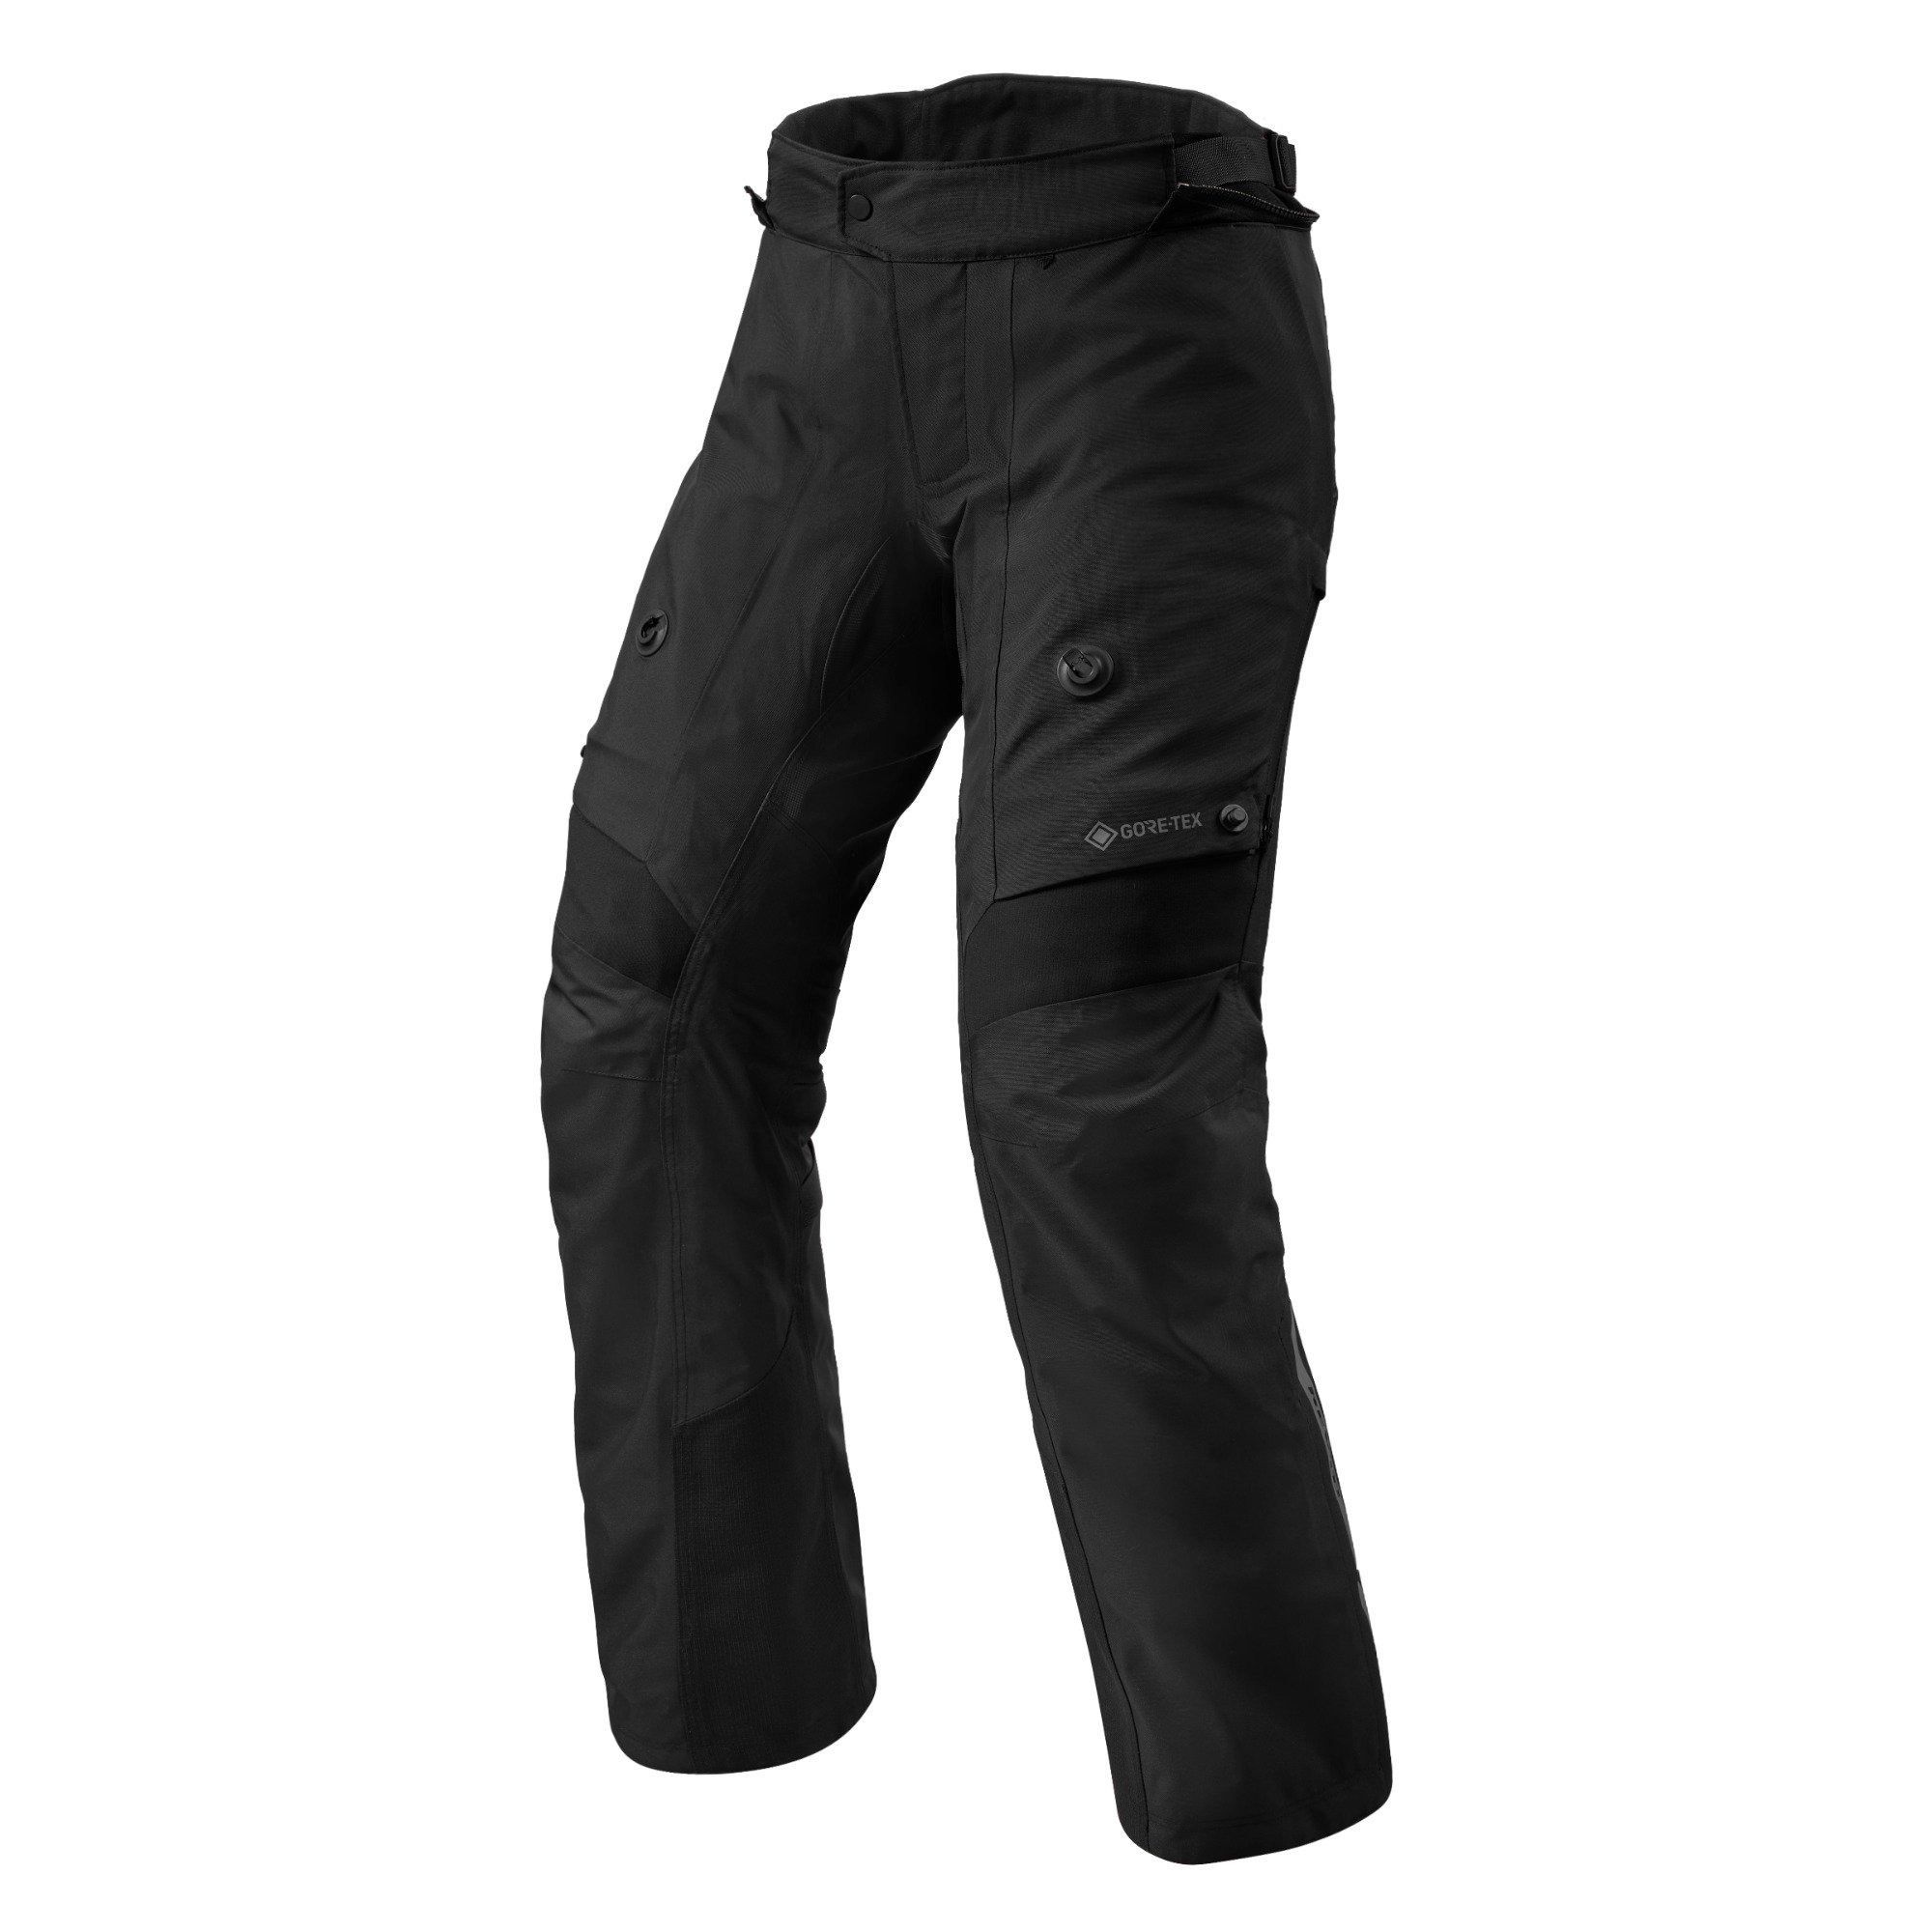 Image of REV'IT! Pants Poseidon 3 GTX Black Standard Motorcycle Pants Size 2XL EN